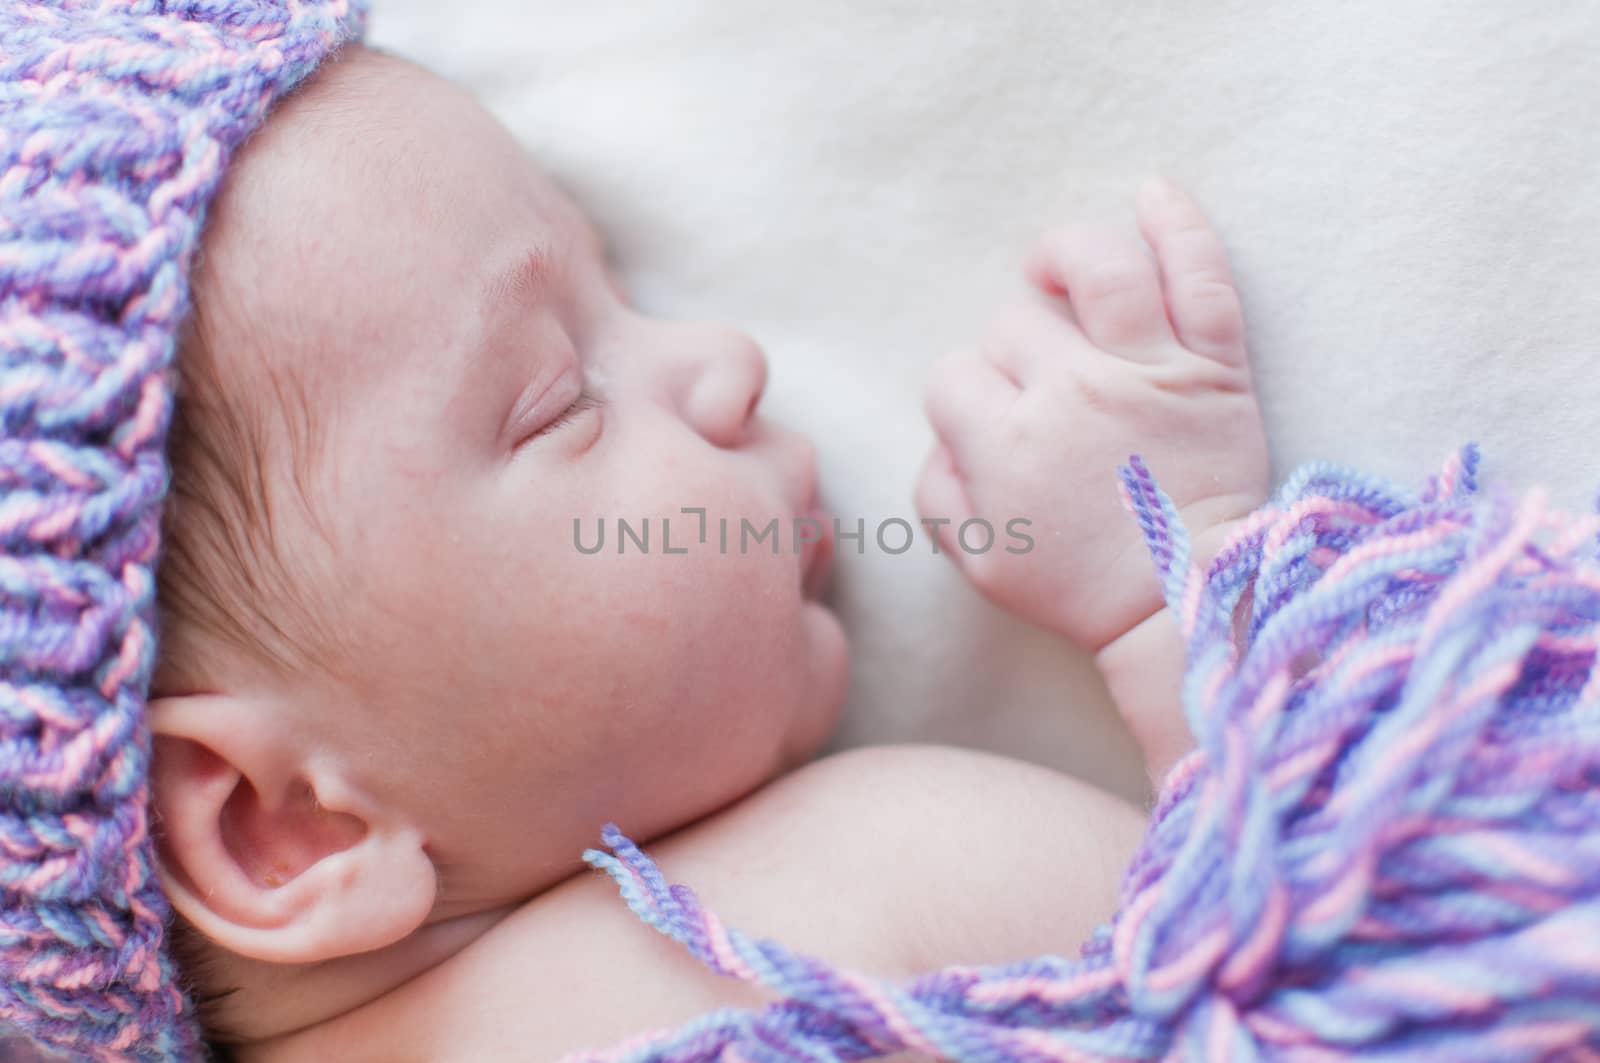 Horizontal portrait of the sleeping baby in purple hat